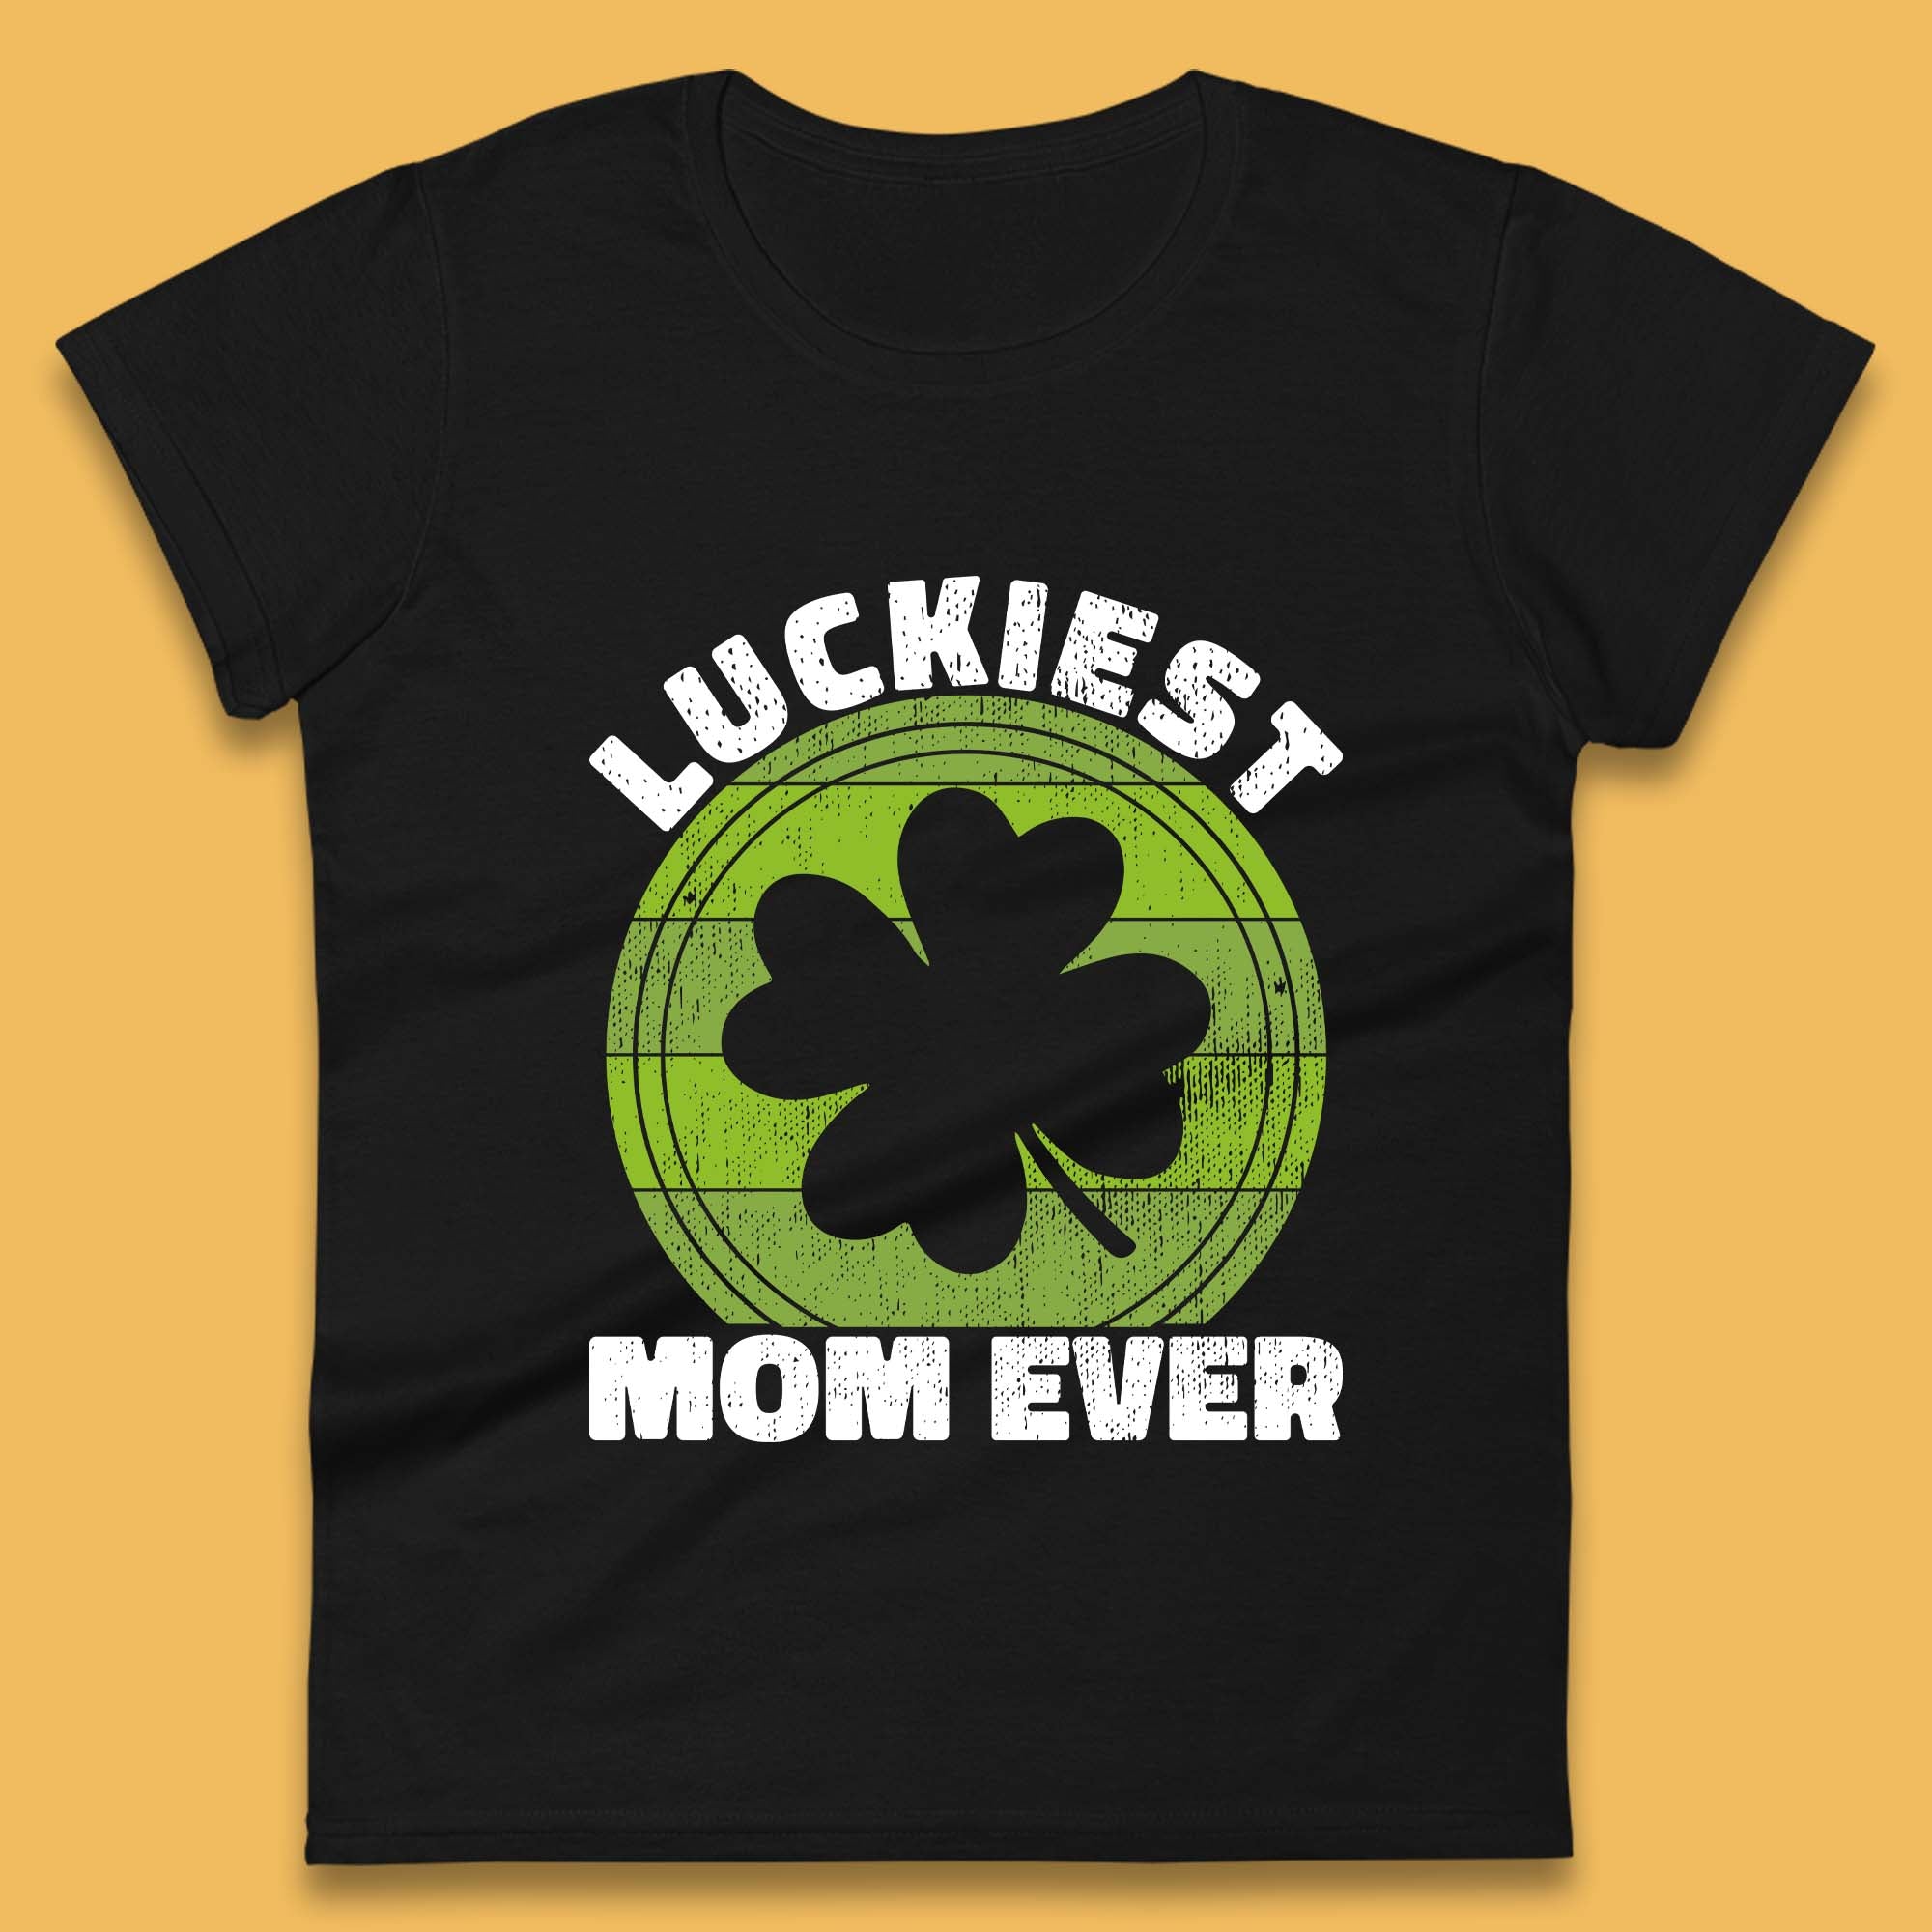 Luckiest Mom Ever Womens T-Shirt